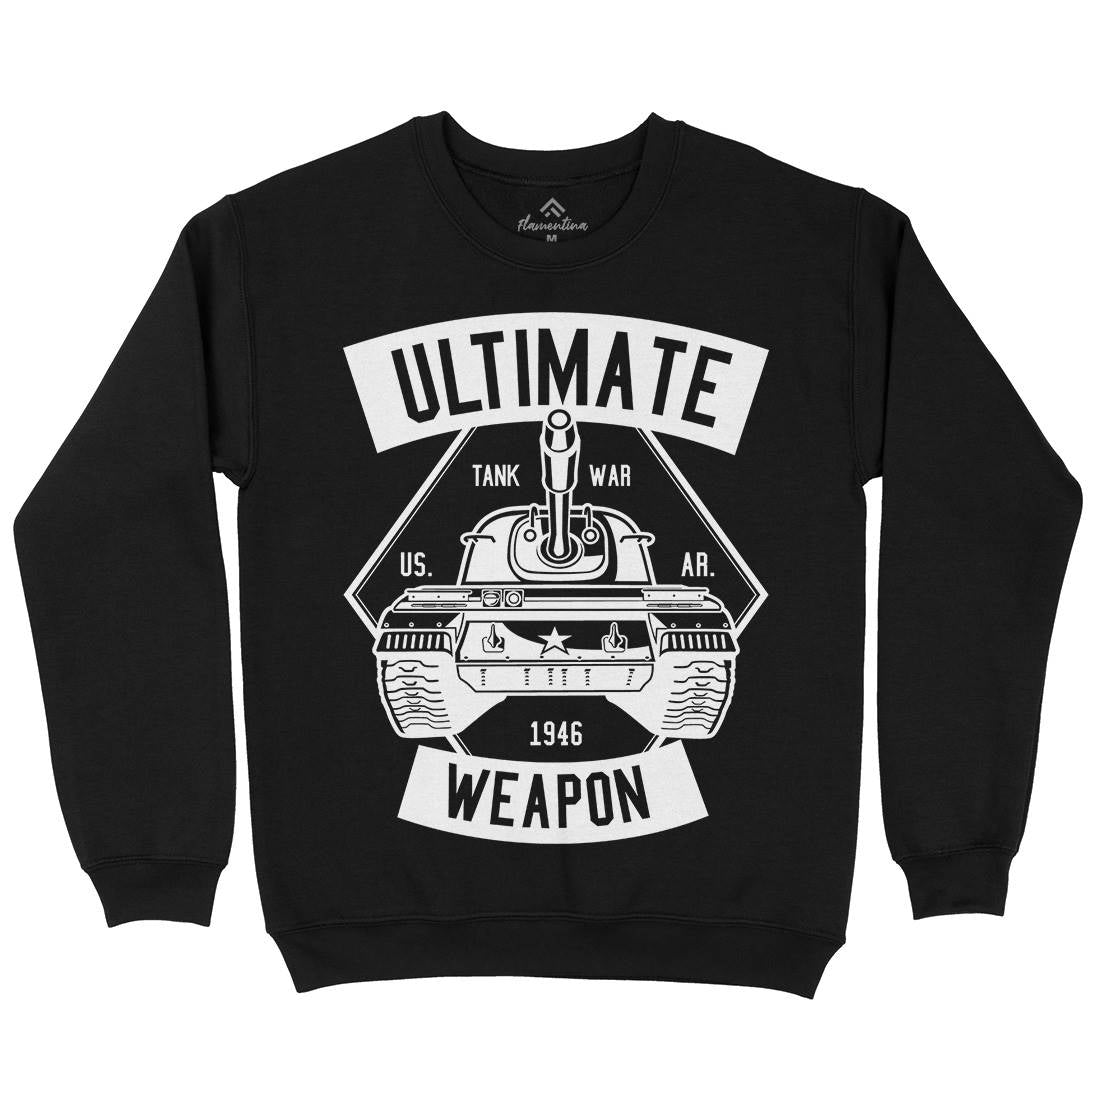 Tank War Ultimate Weapon Kids Crew Neck Sweatshirt Army B649